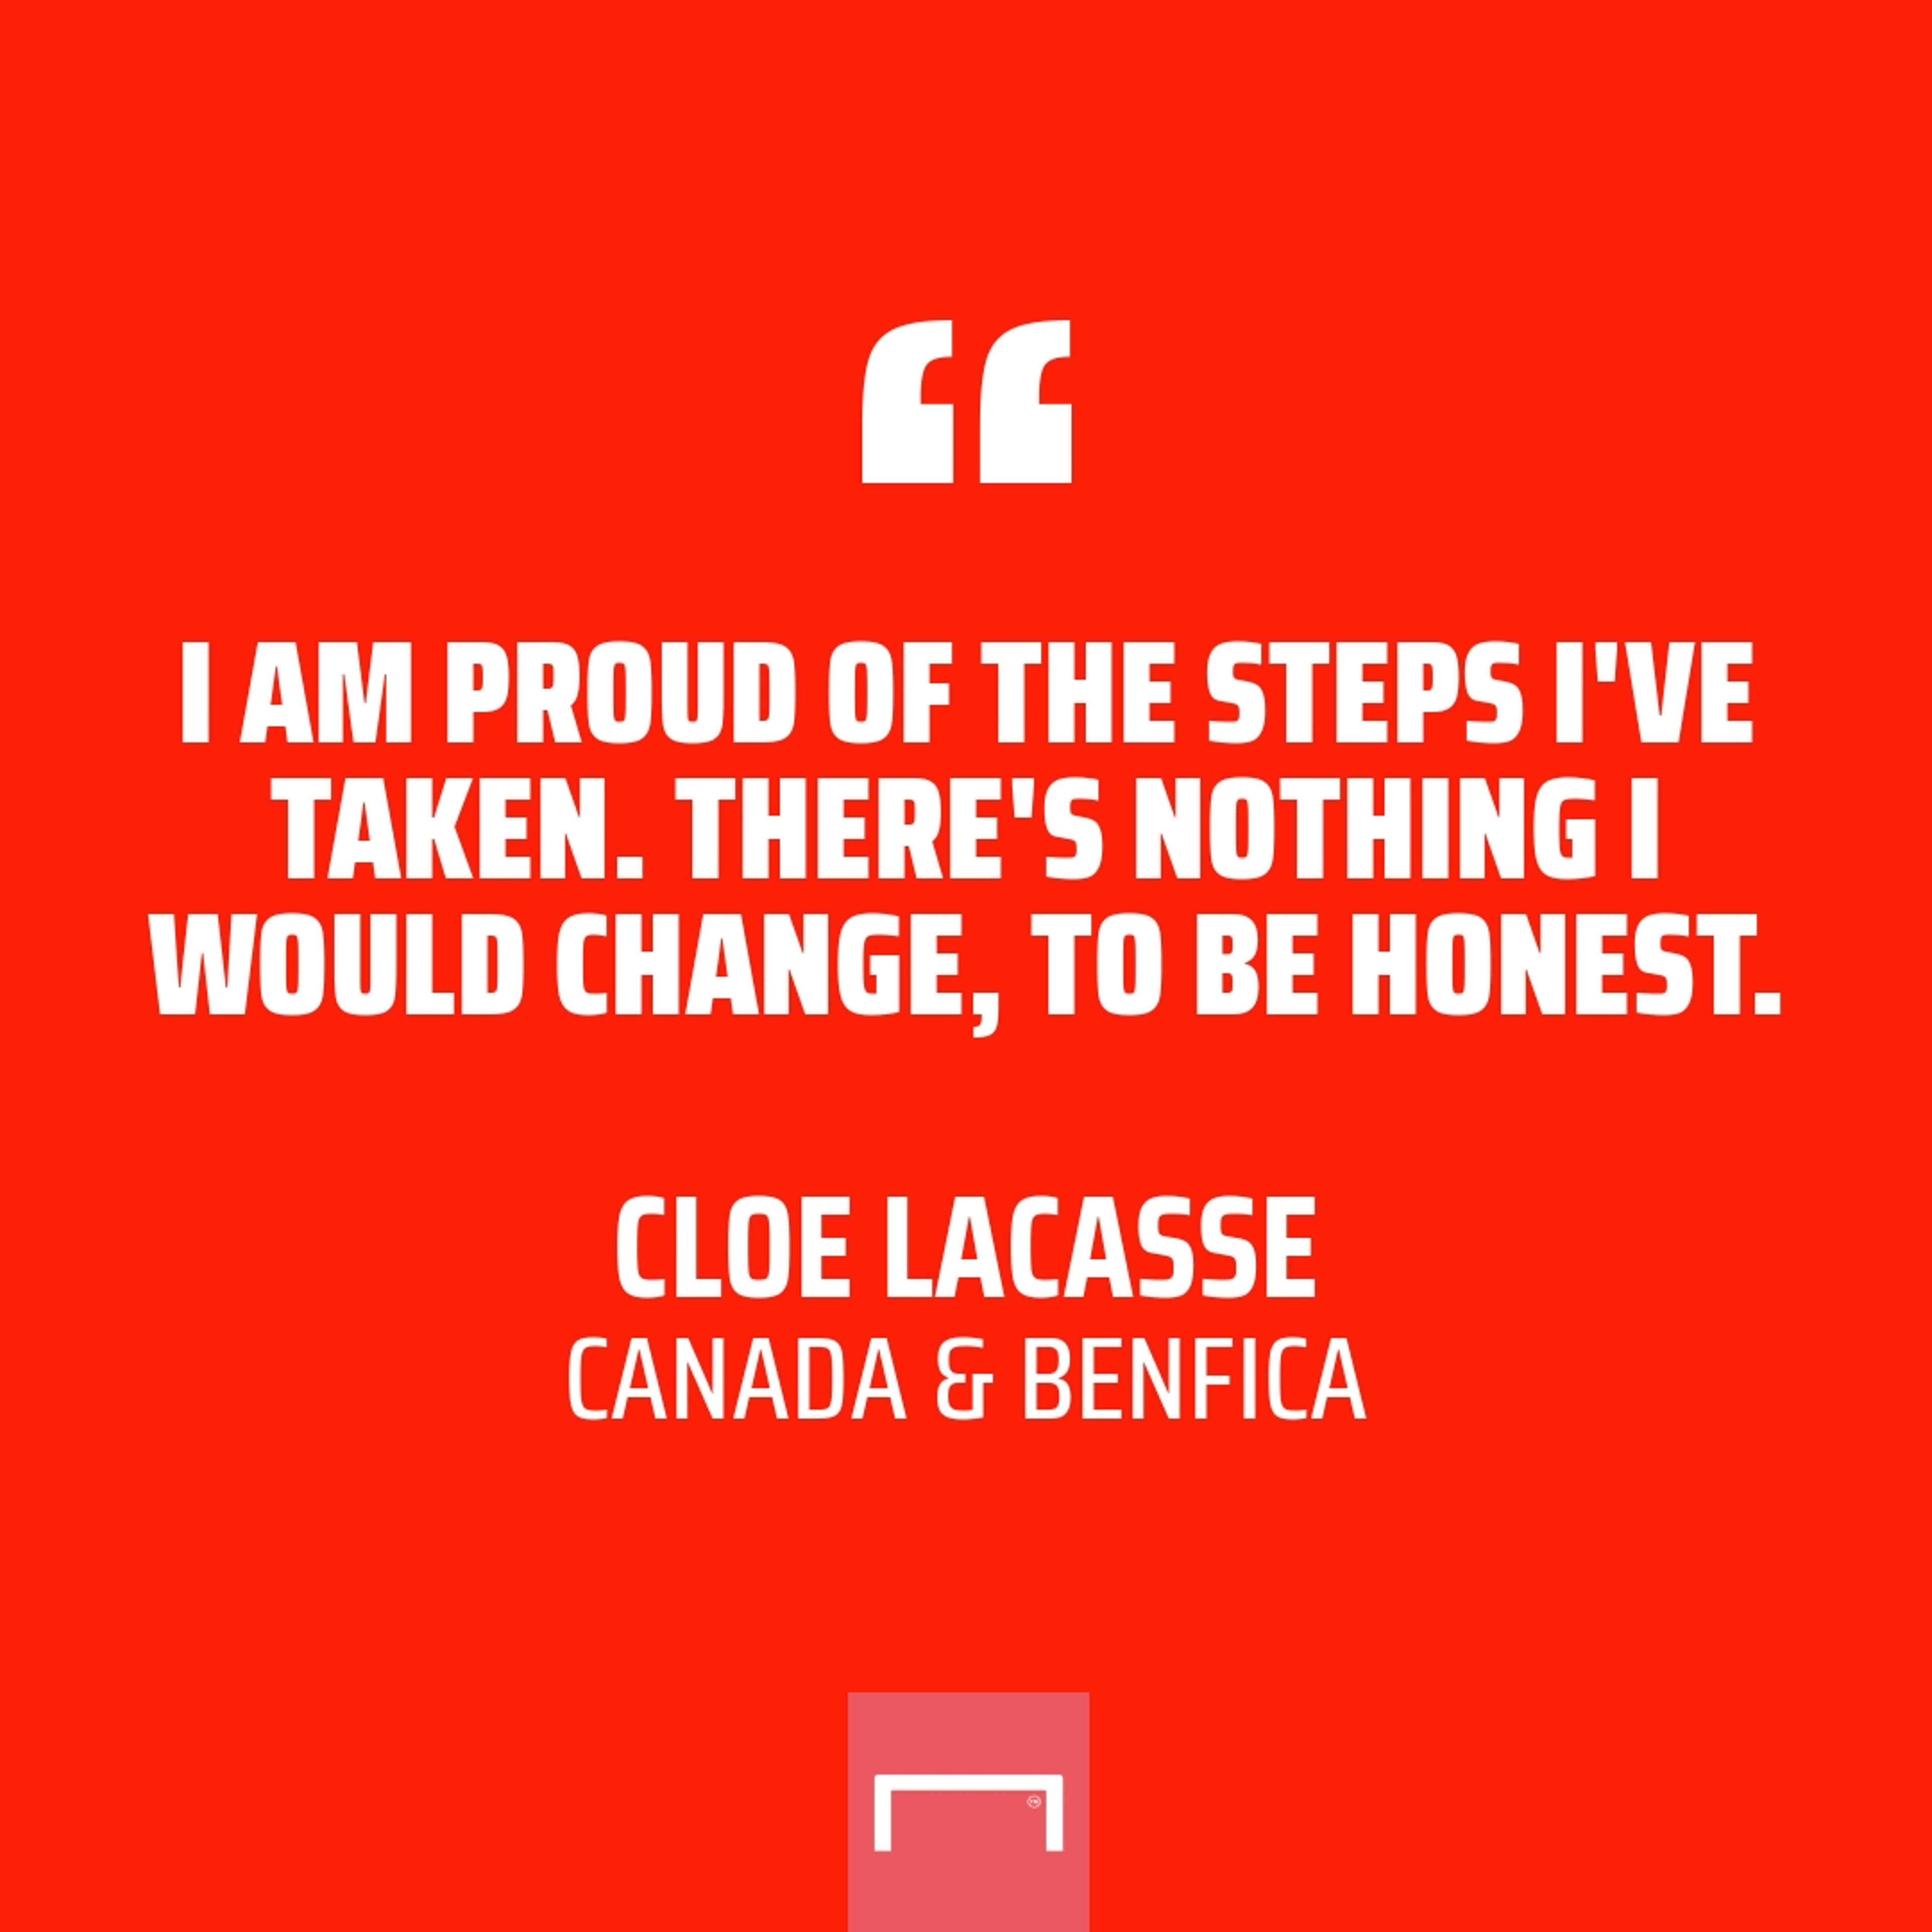 Cloe Lacasse quote PS gfx 1:1